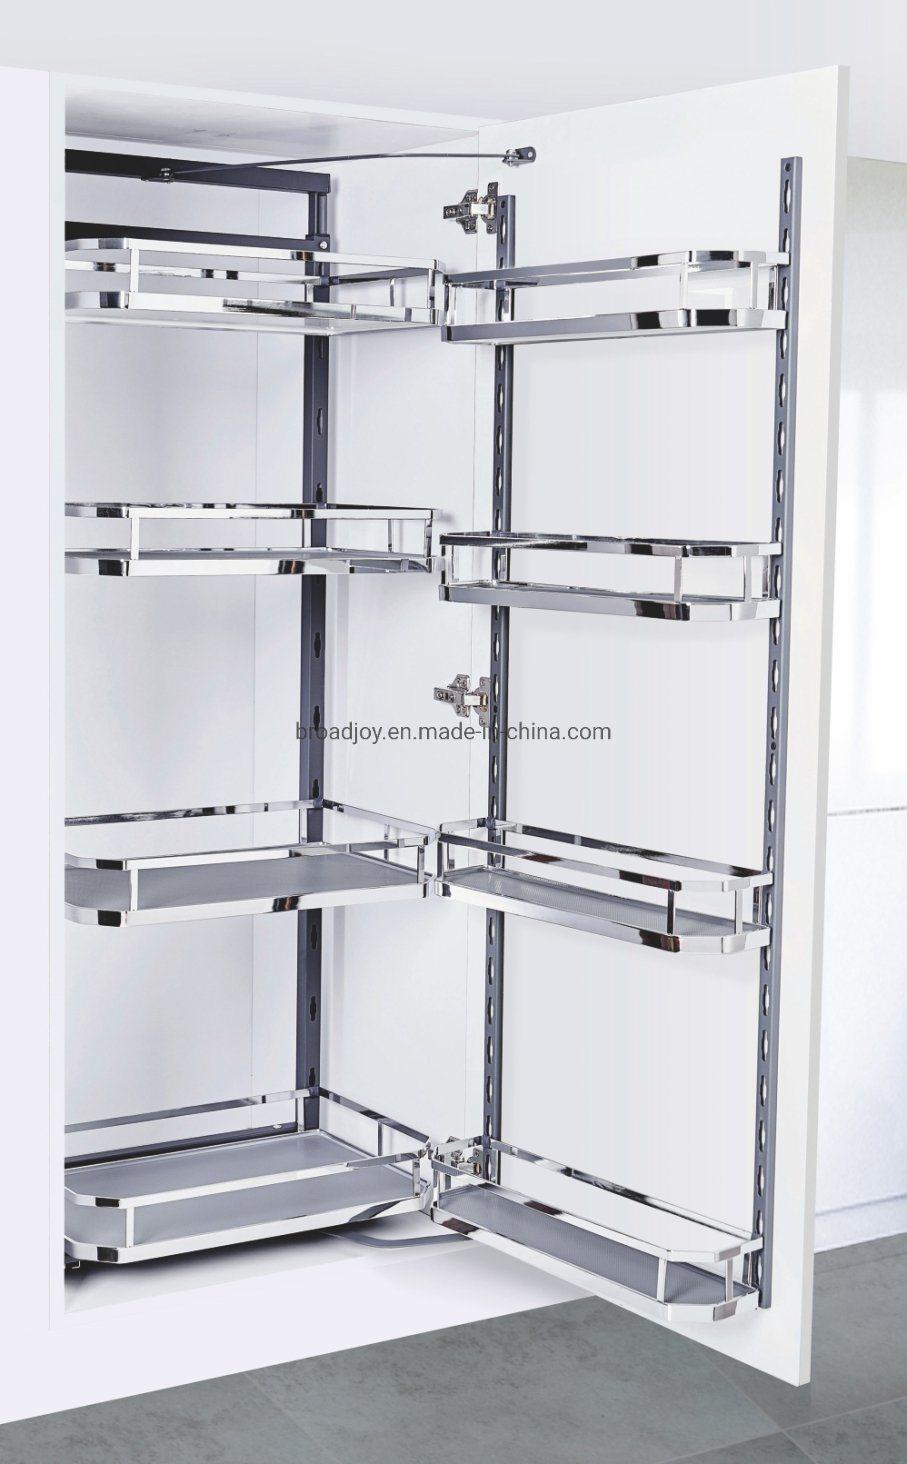 Kitchen Cabinet Hardware Accessories Pantry Units Pull out Drawer Basket Storage Organizer Kitchen Cabinet Racks